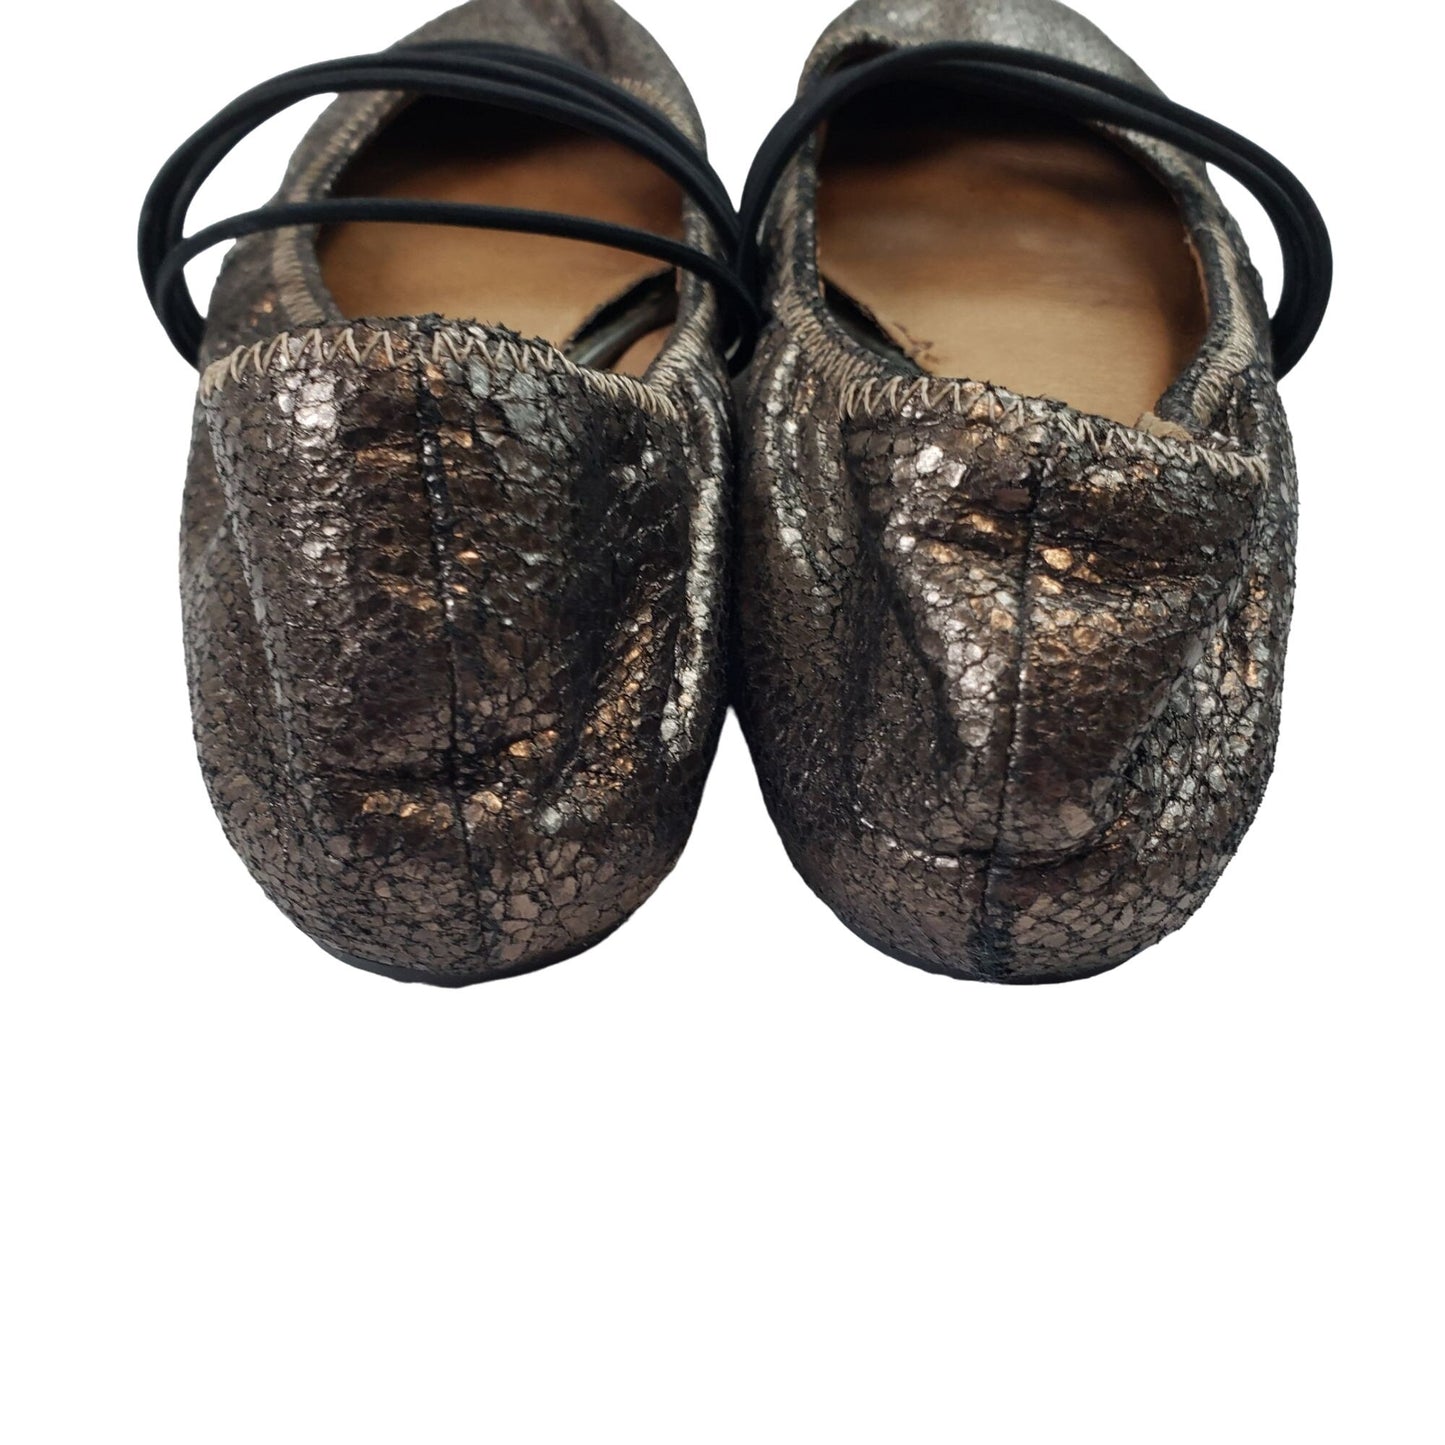 Tsubo Honnor Gold Metallic Crackle Leather Slip-On Flats Size 9.5